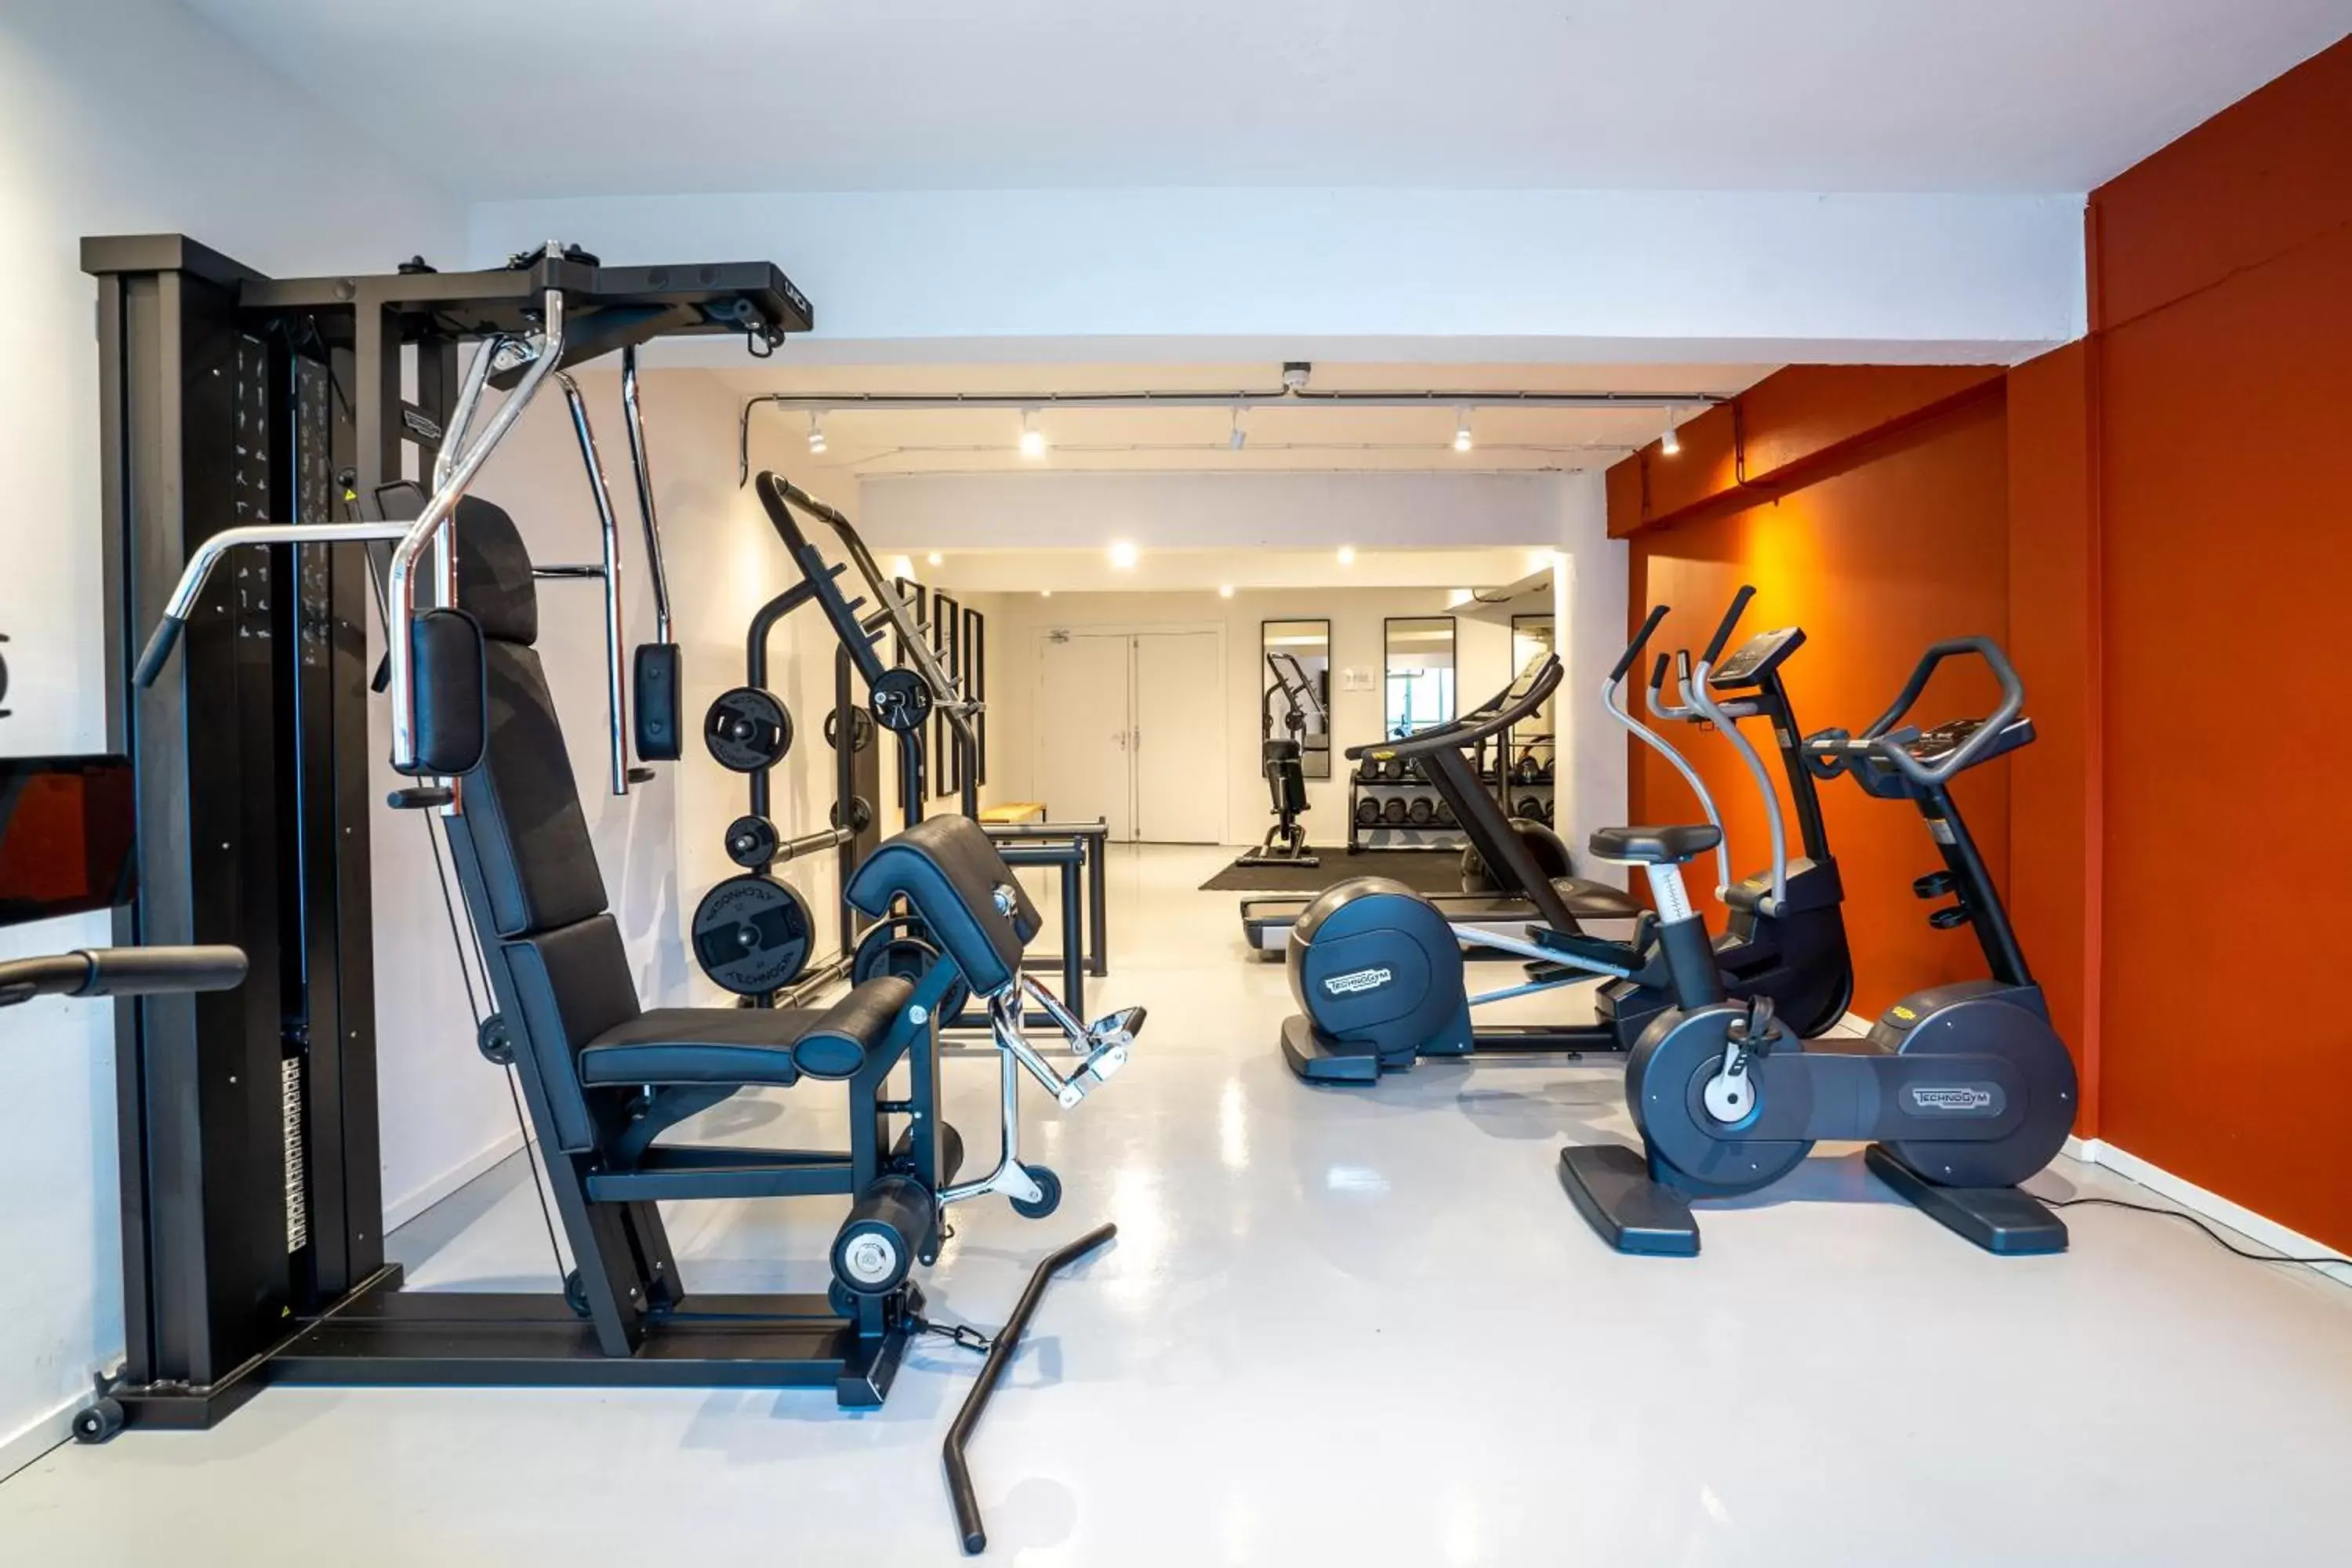 Fitness centre/facilities, Fitness Center/Facilities in Gooiland Hotel